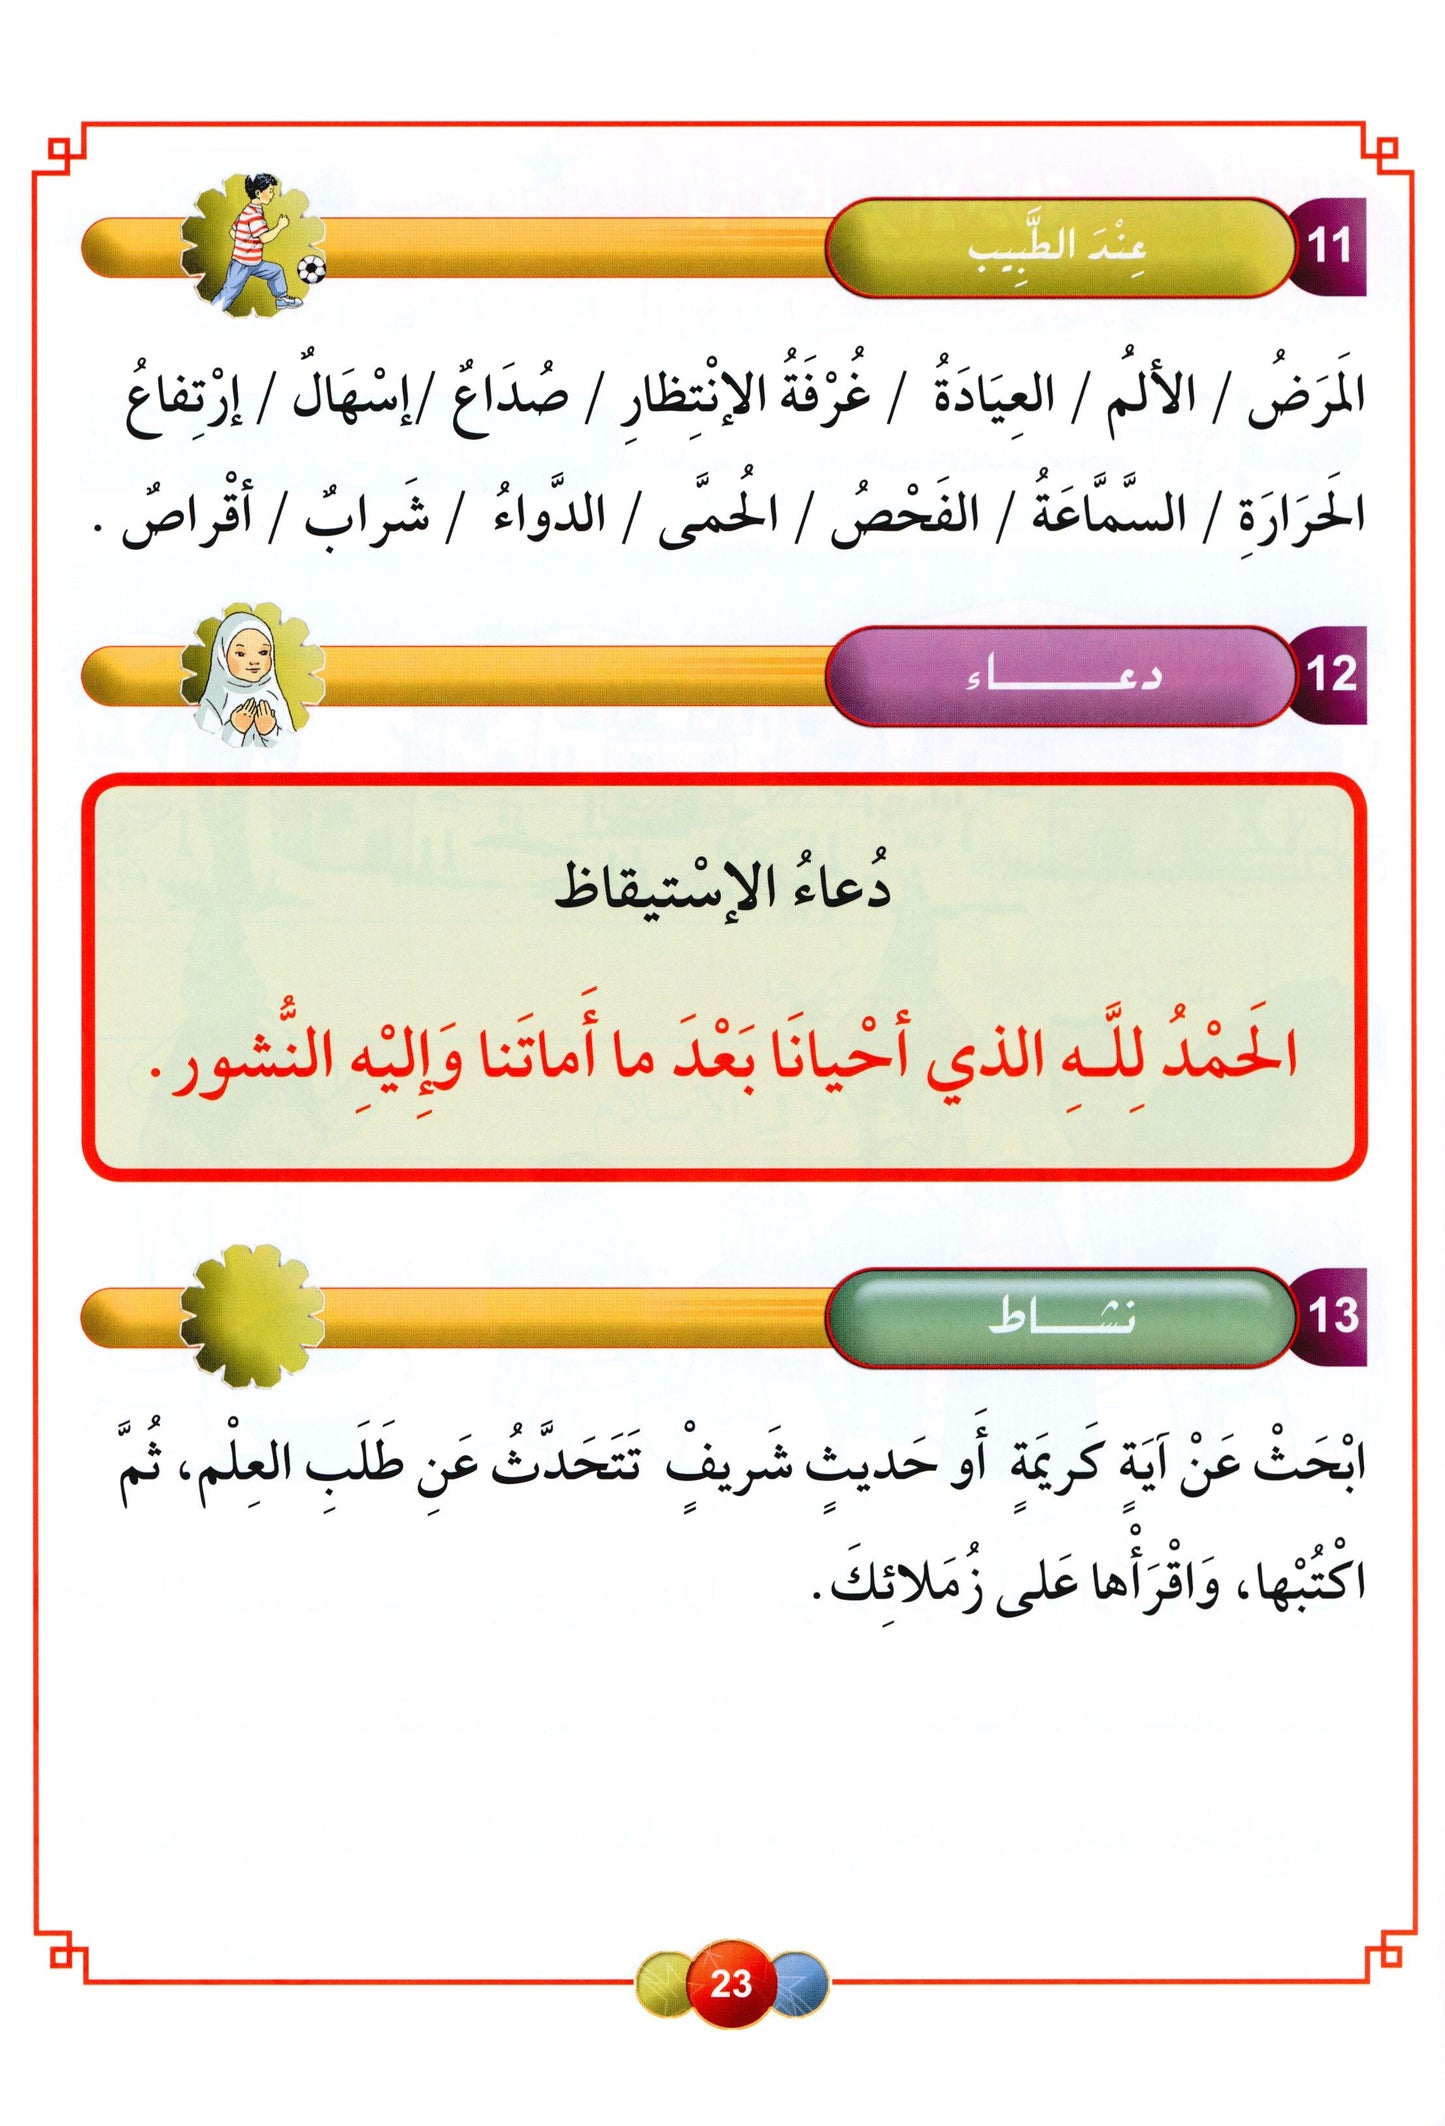 Al Aafaq Textbook - Grade/Level 3